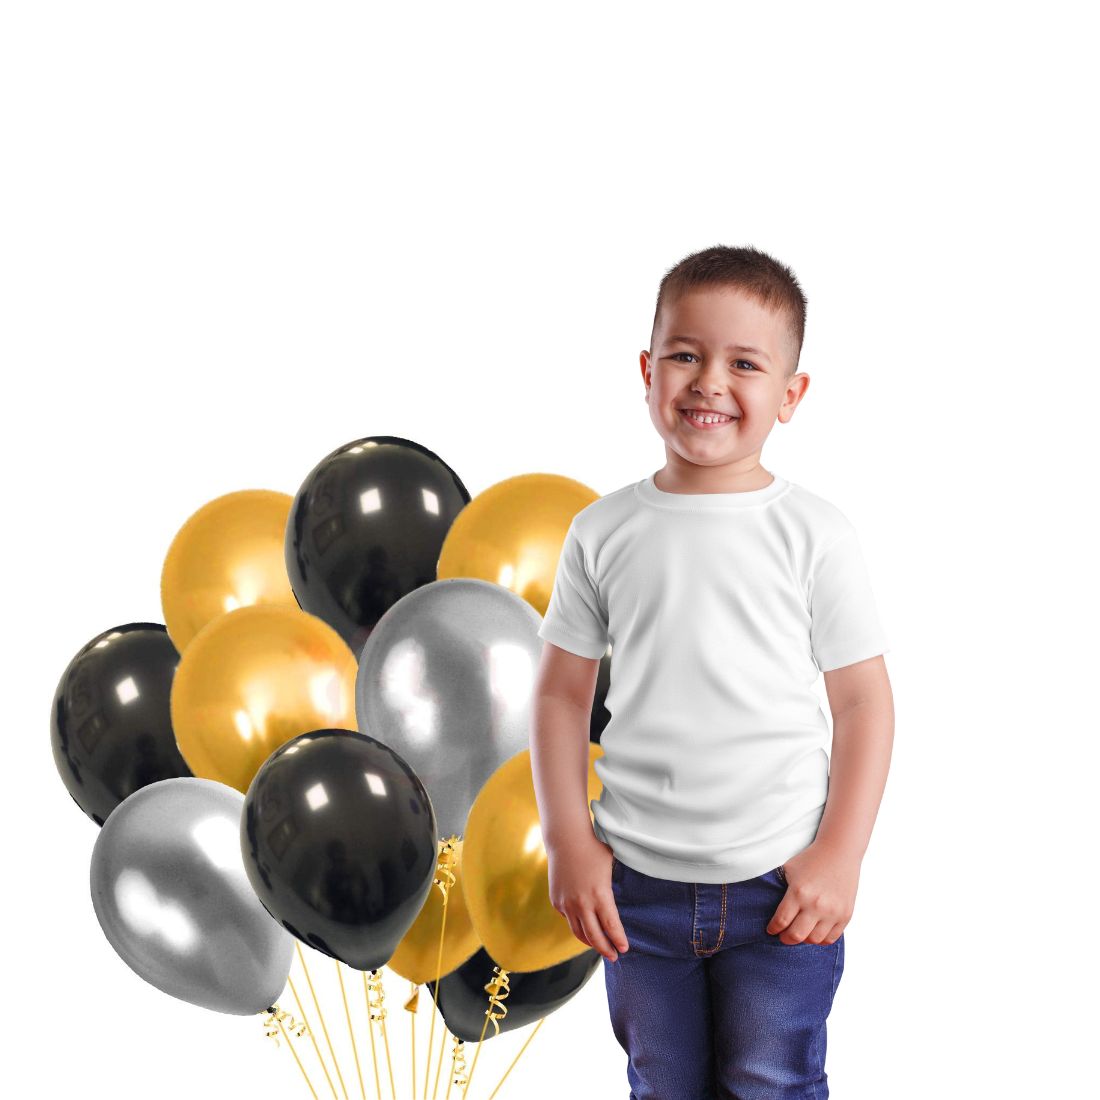 100Pcs Black, Golden and Silver Metallic Balloons For Ballons